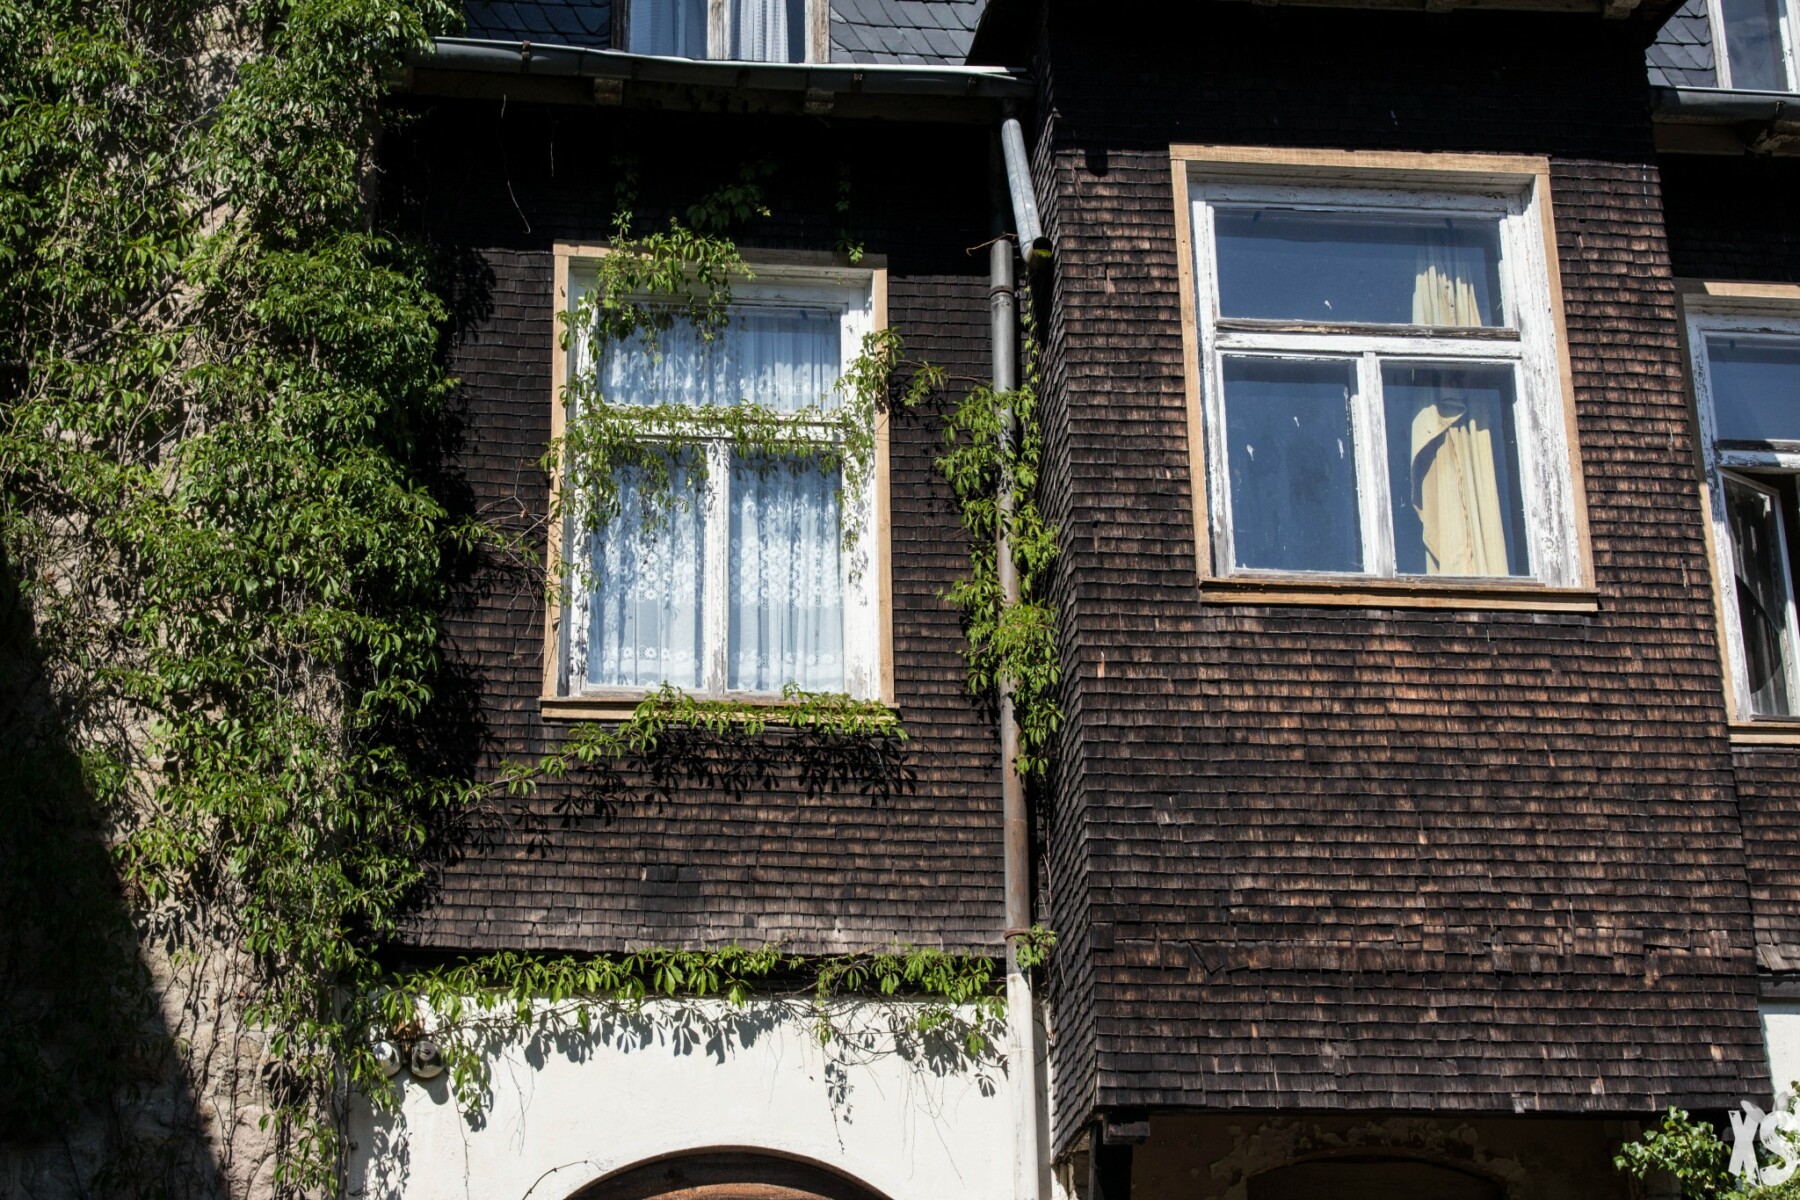 Hôtel abandonné en Allemagne